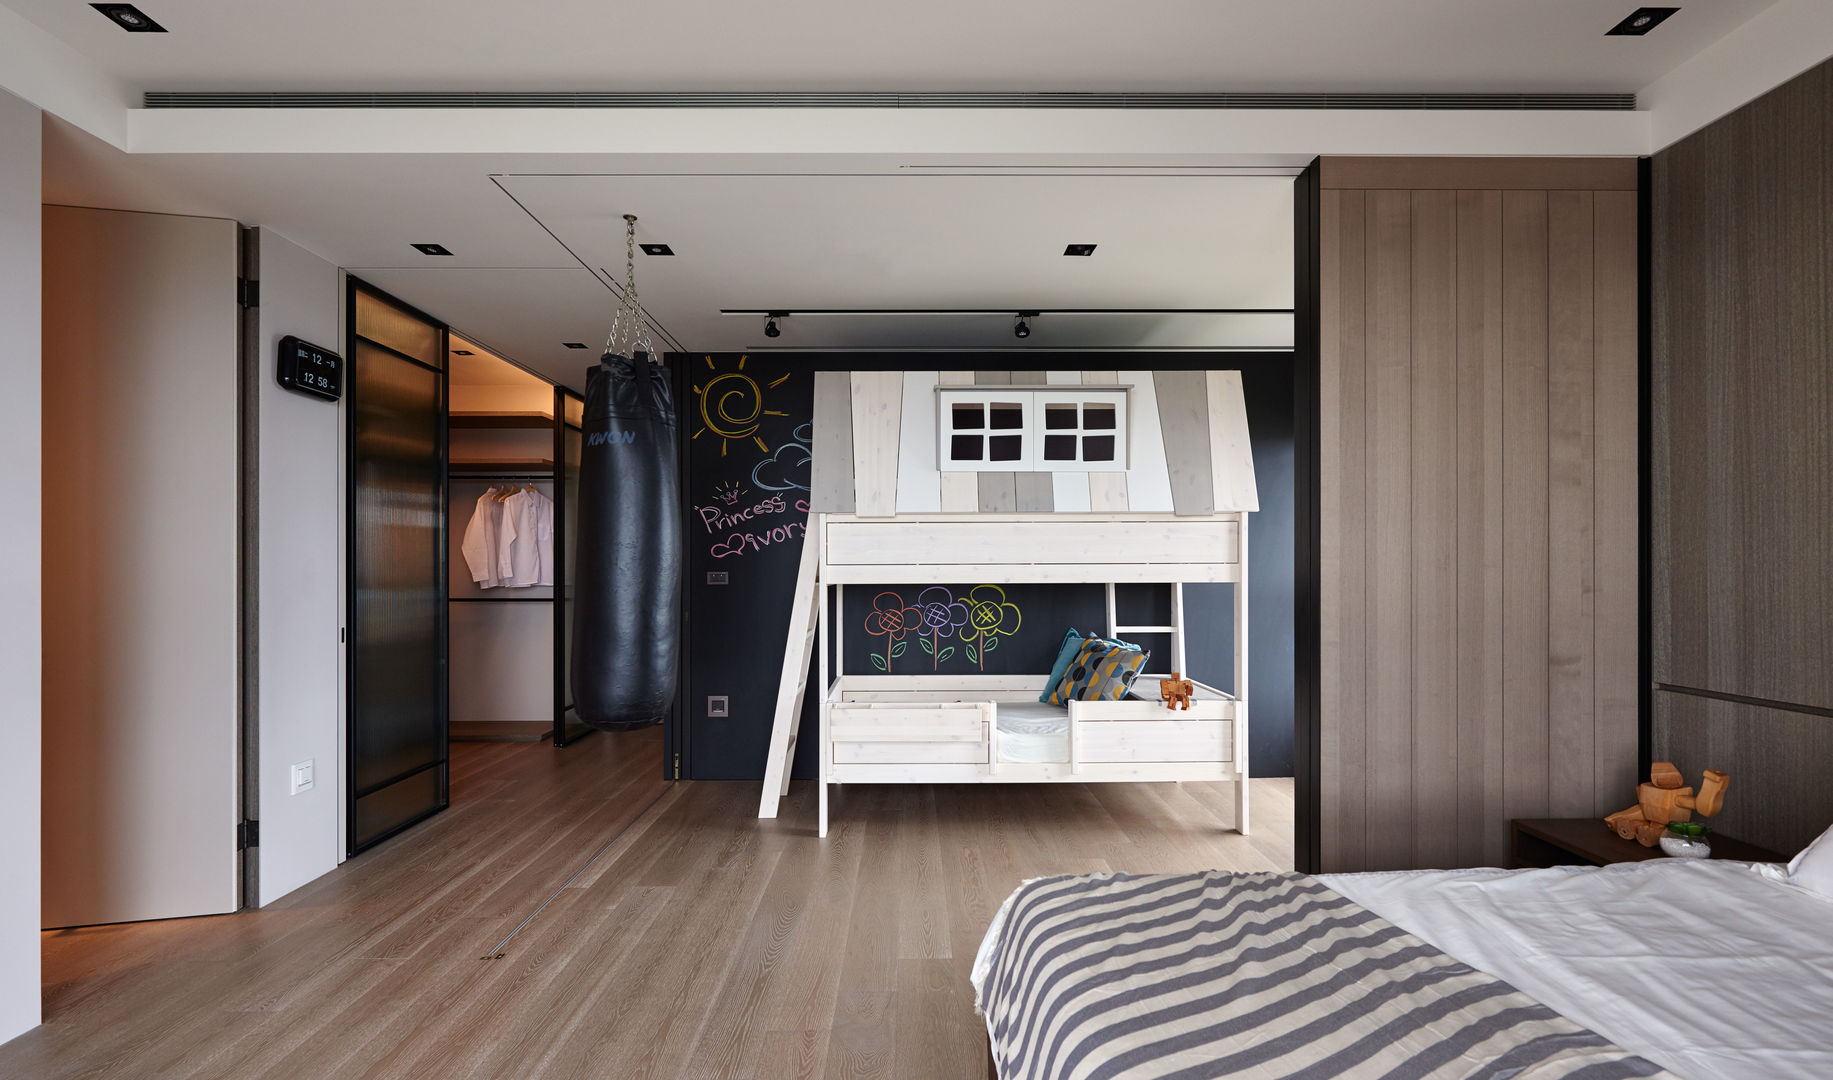 林口楊宅, 域見室所設計 MIEMASU INTERIOR DESIGN 域見室所設計 MIEMASU INTERIOR DESIGN Dormitorios infantiles de estilo moderno